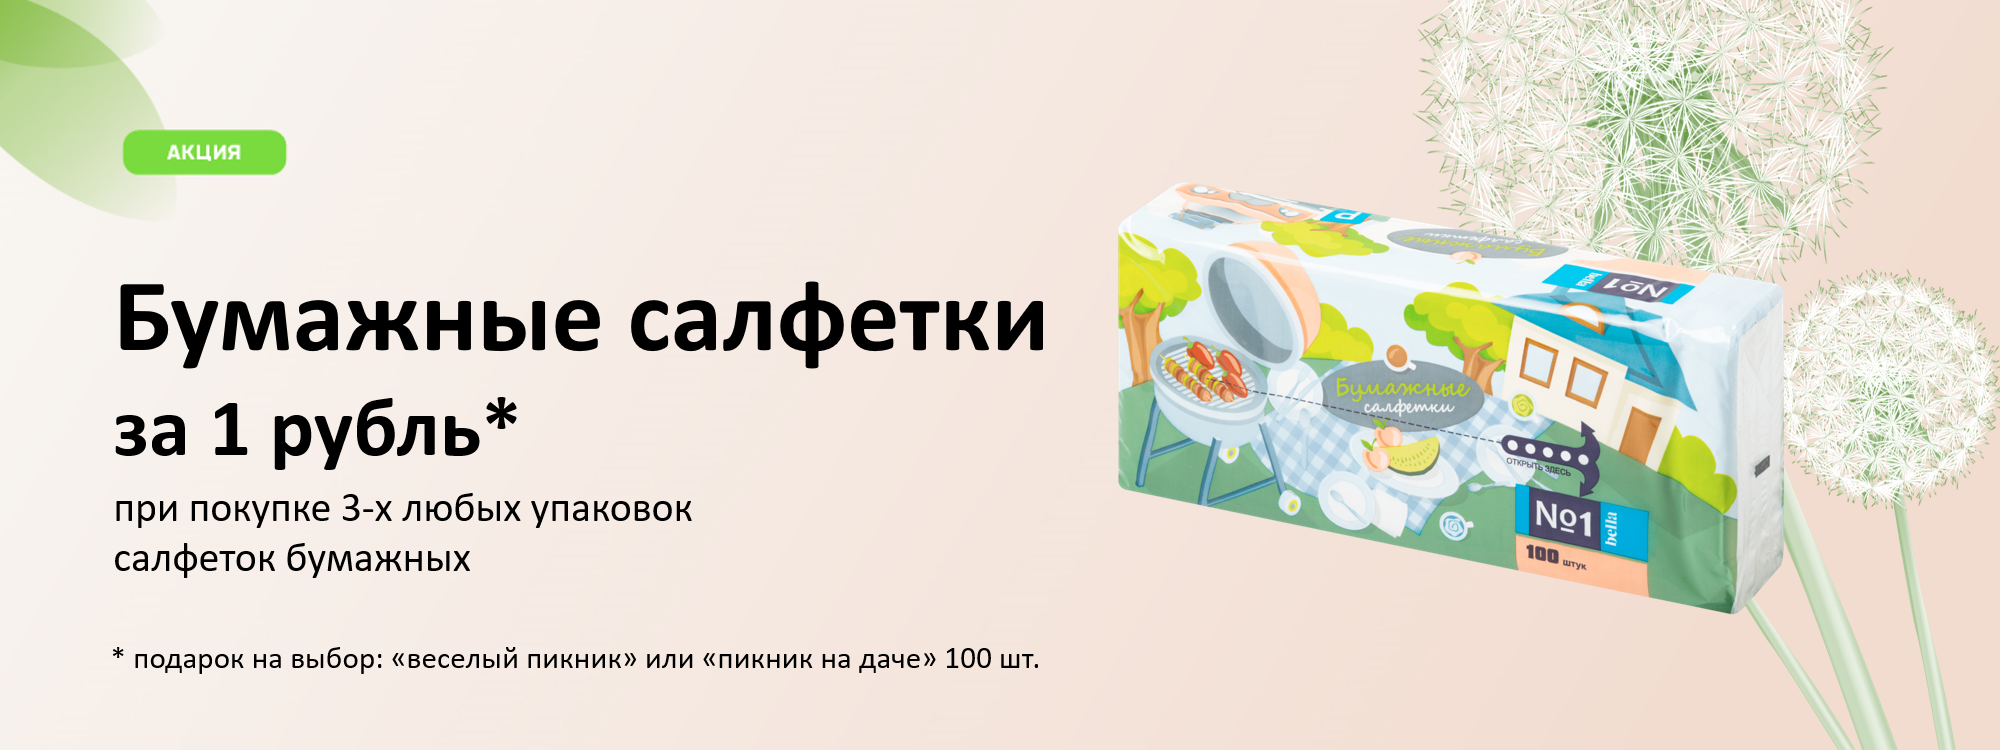 Бумажные салфетки за 1 рубль